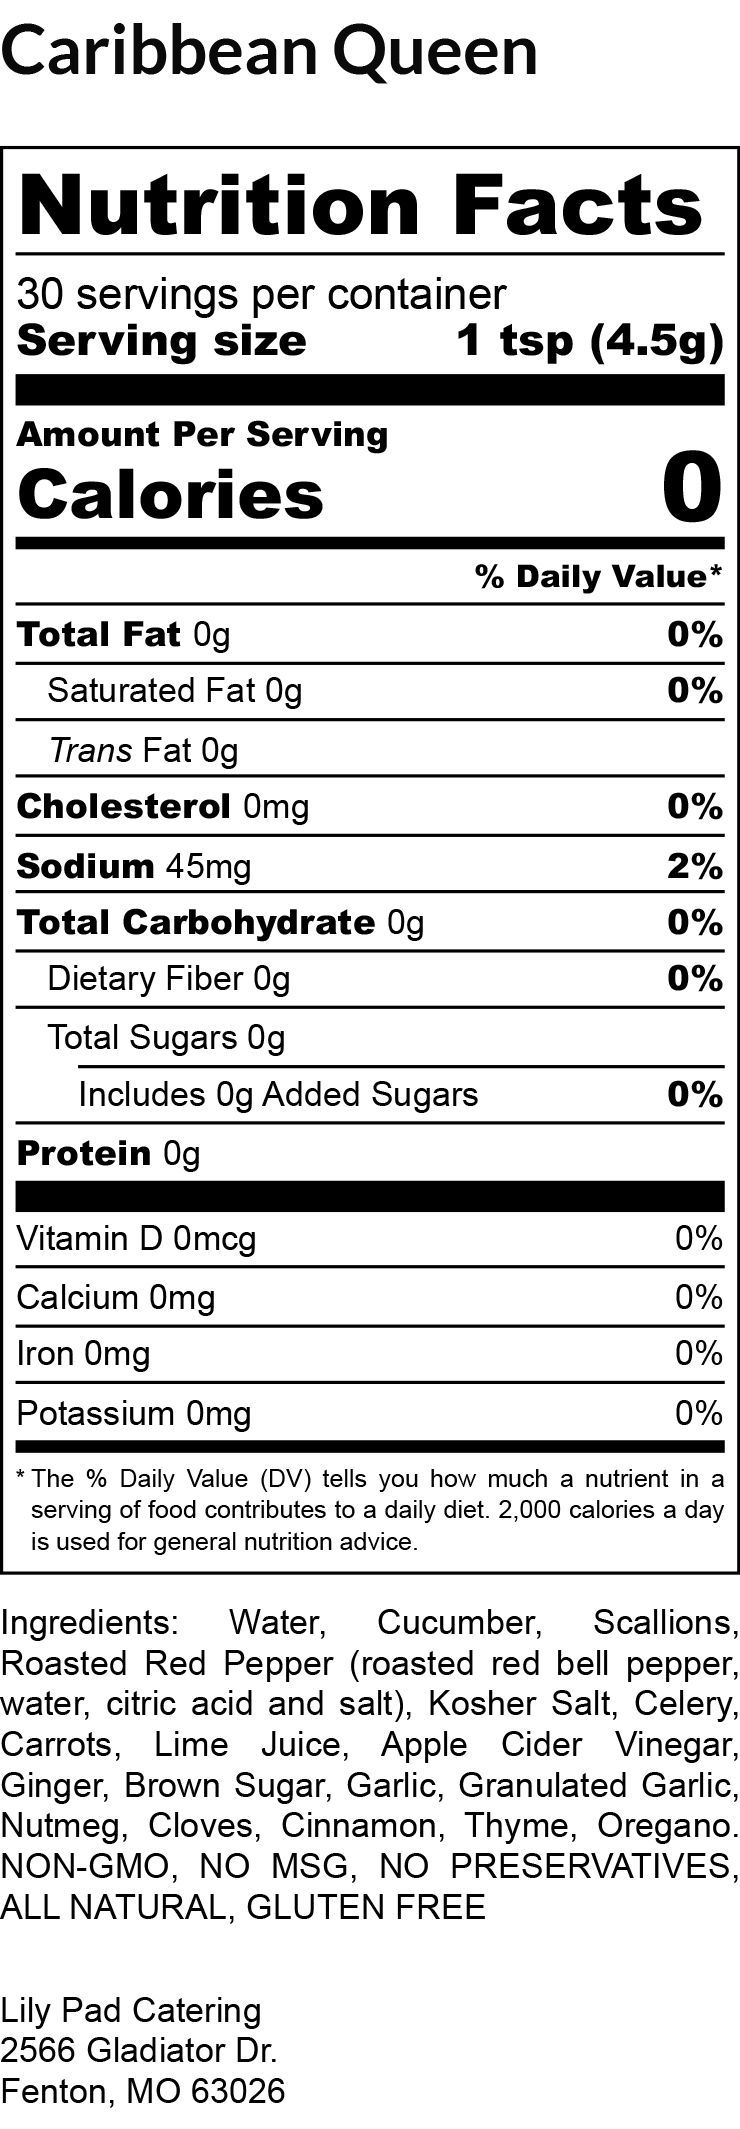 Caribbean-Queen-Nutrition-Label